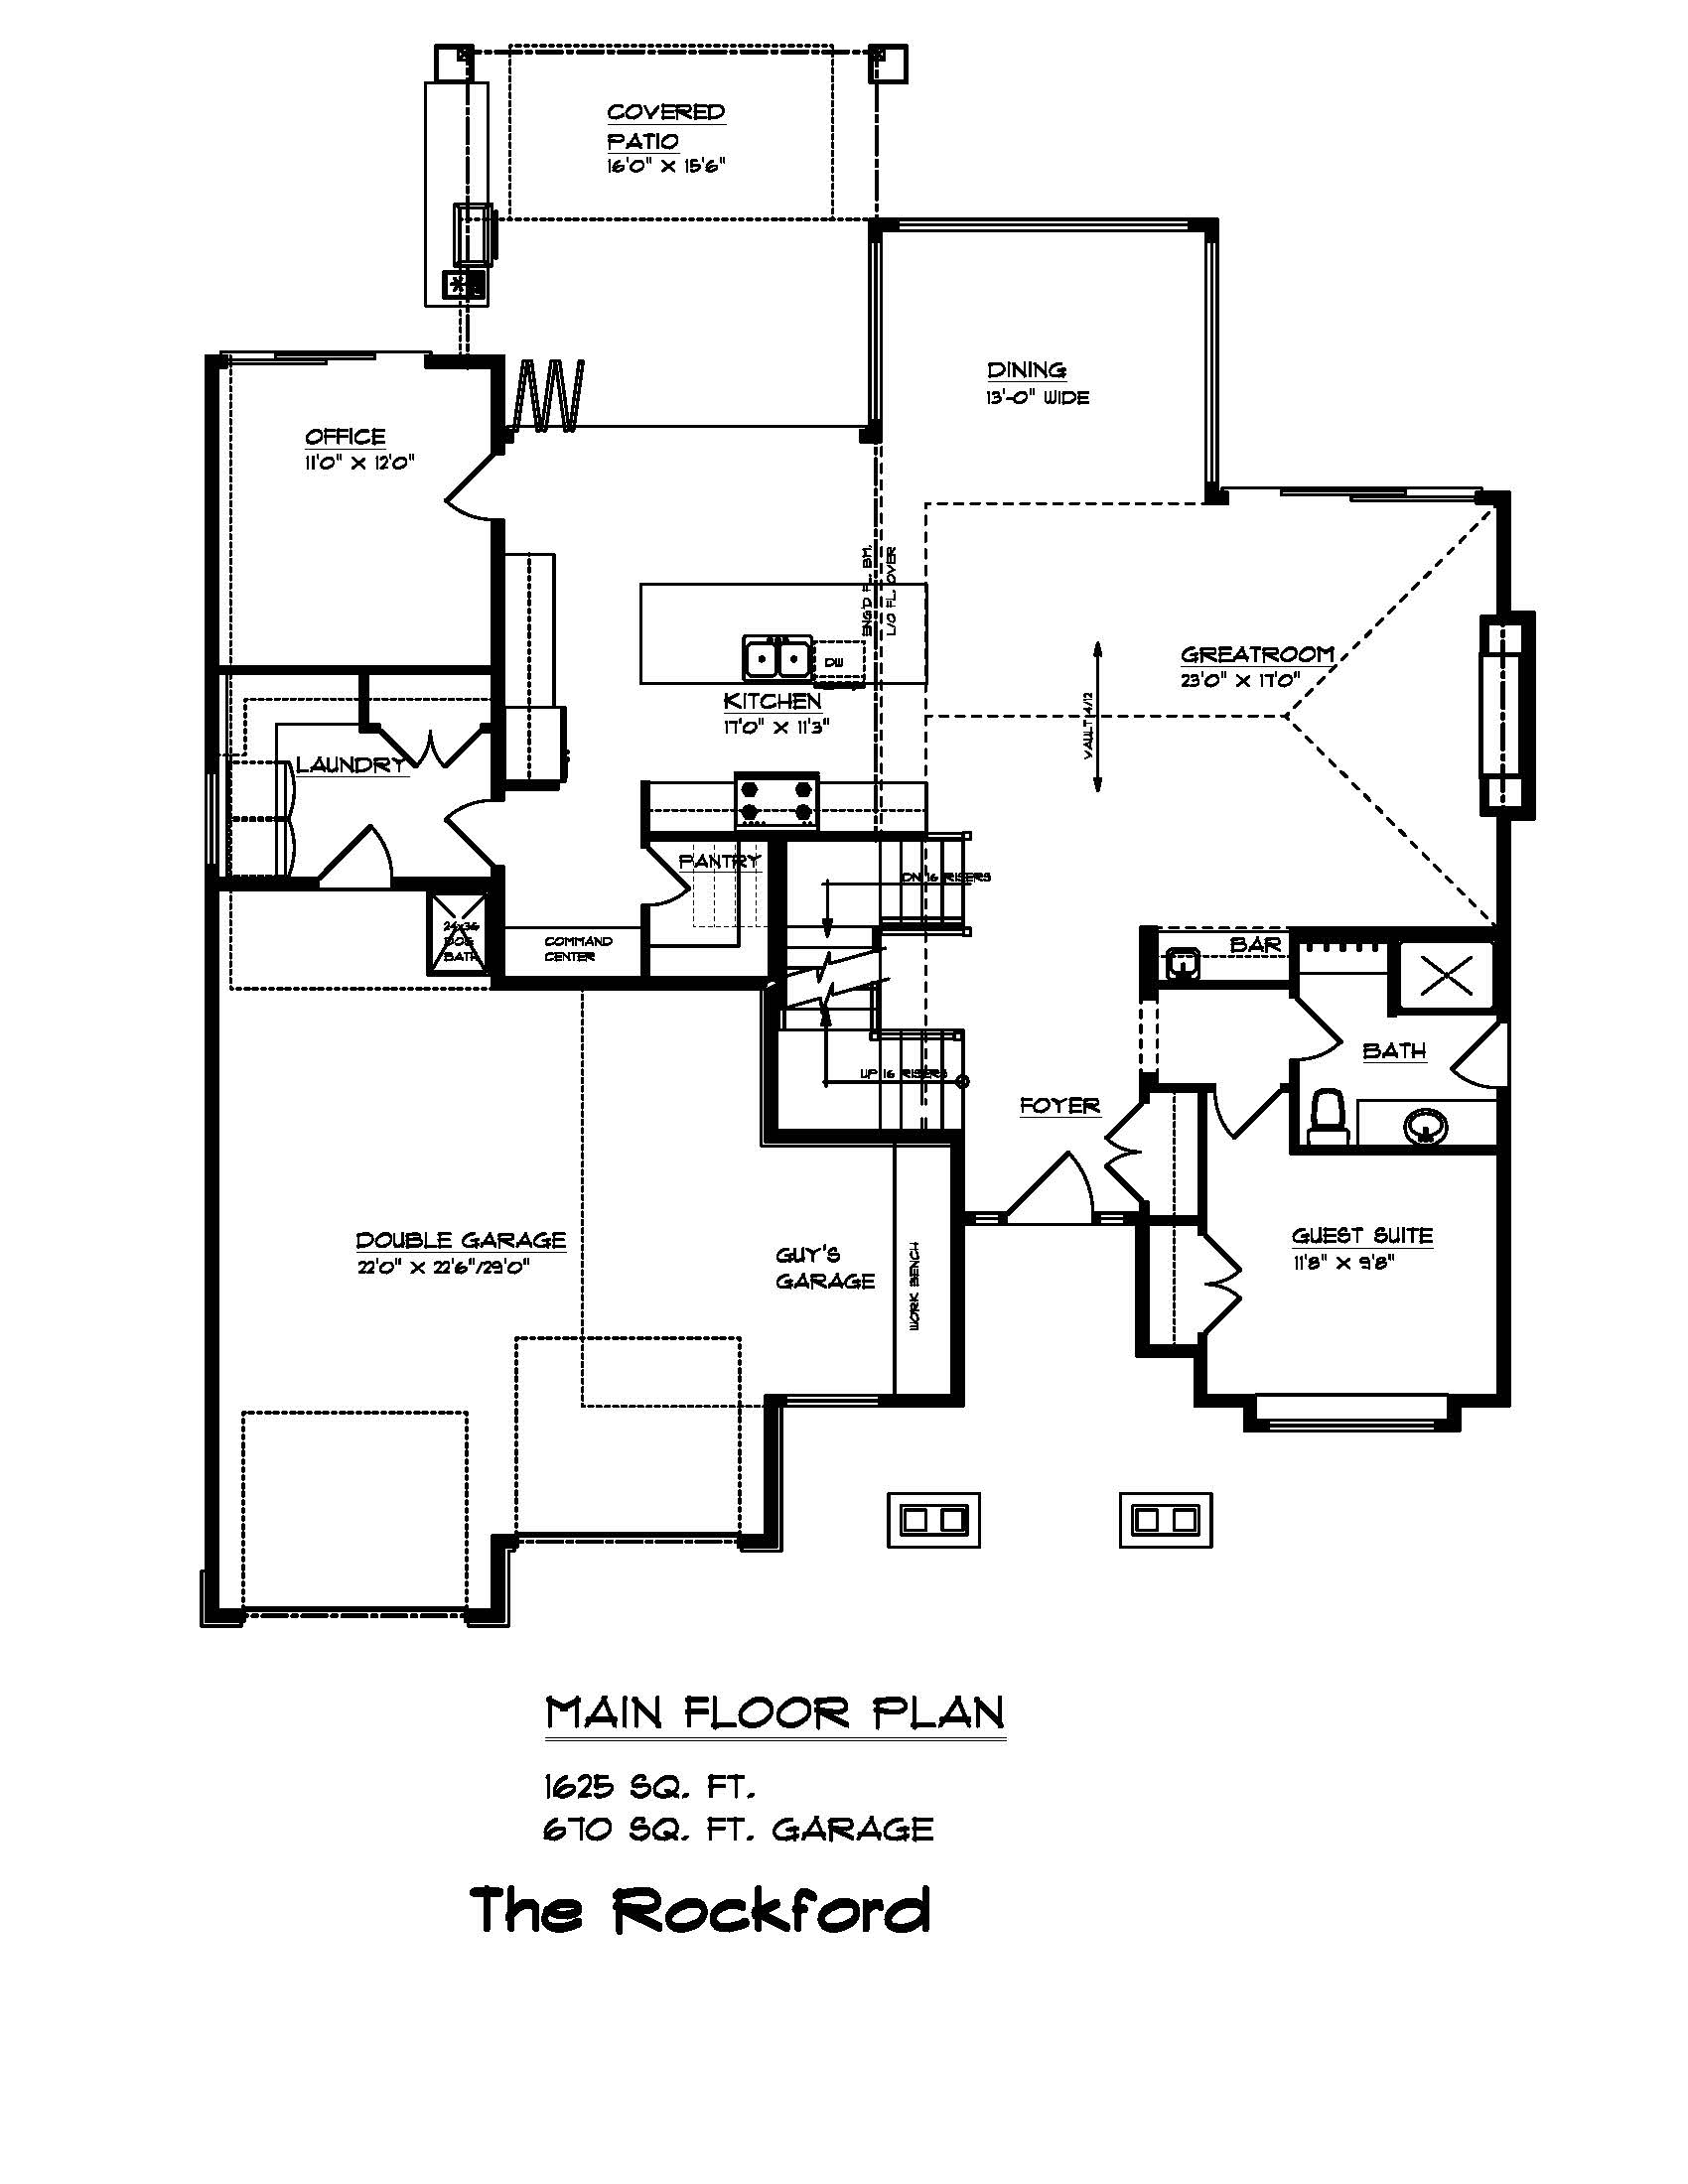 The Rockford - Custom Home Floor Plan 2